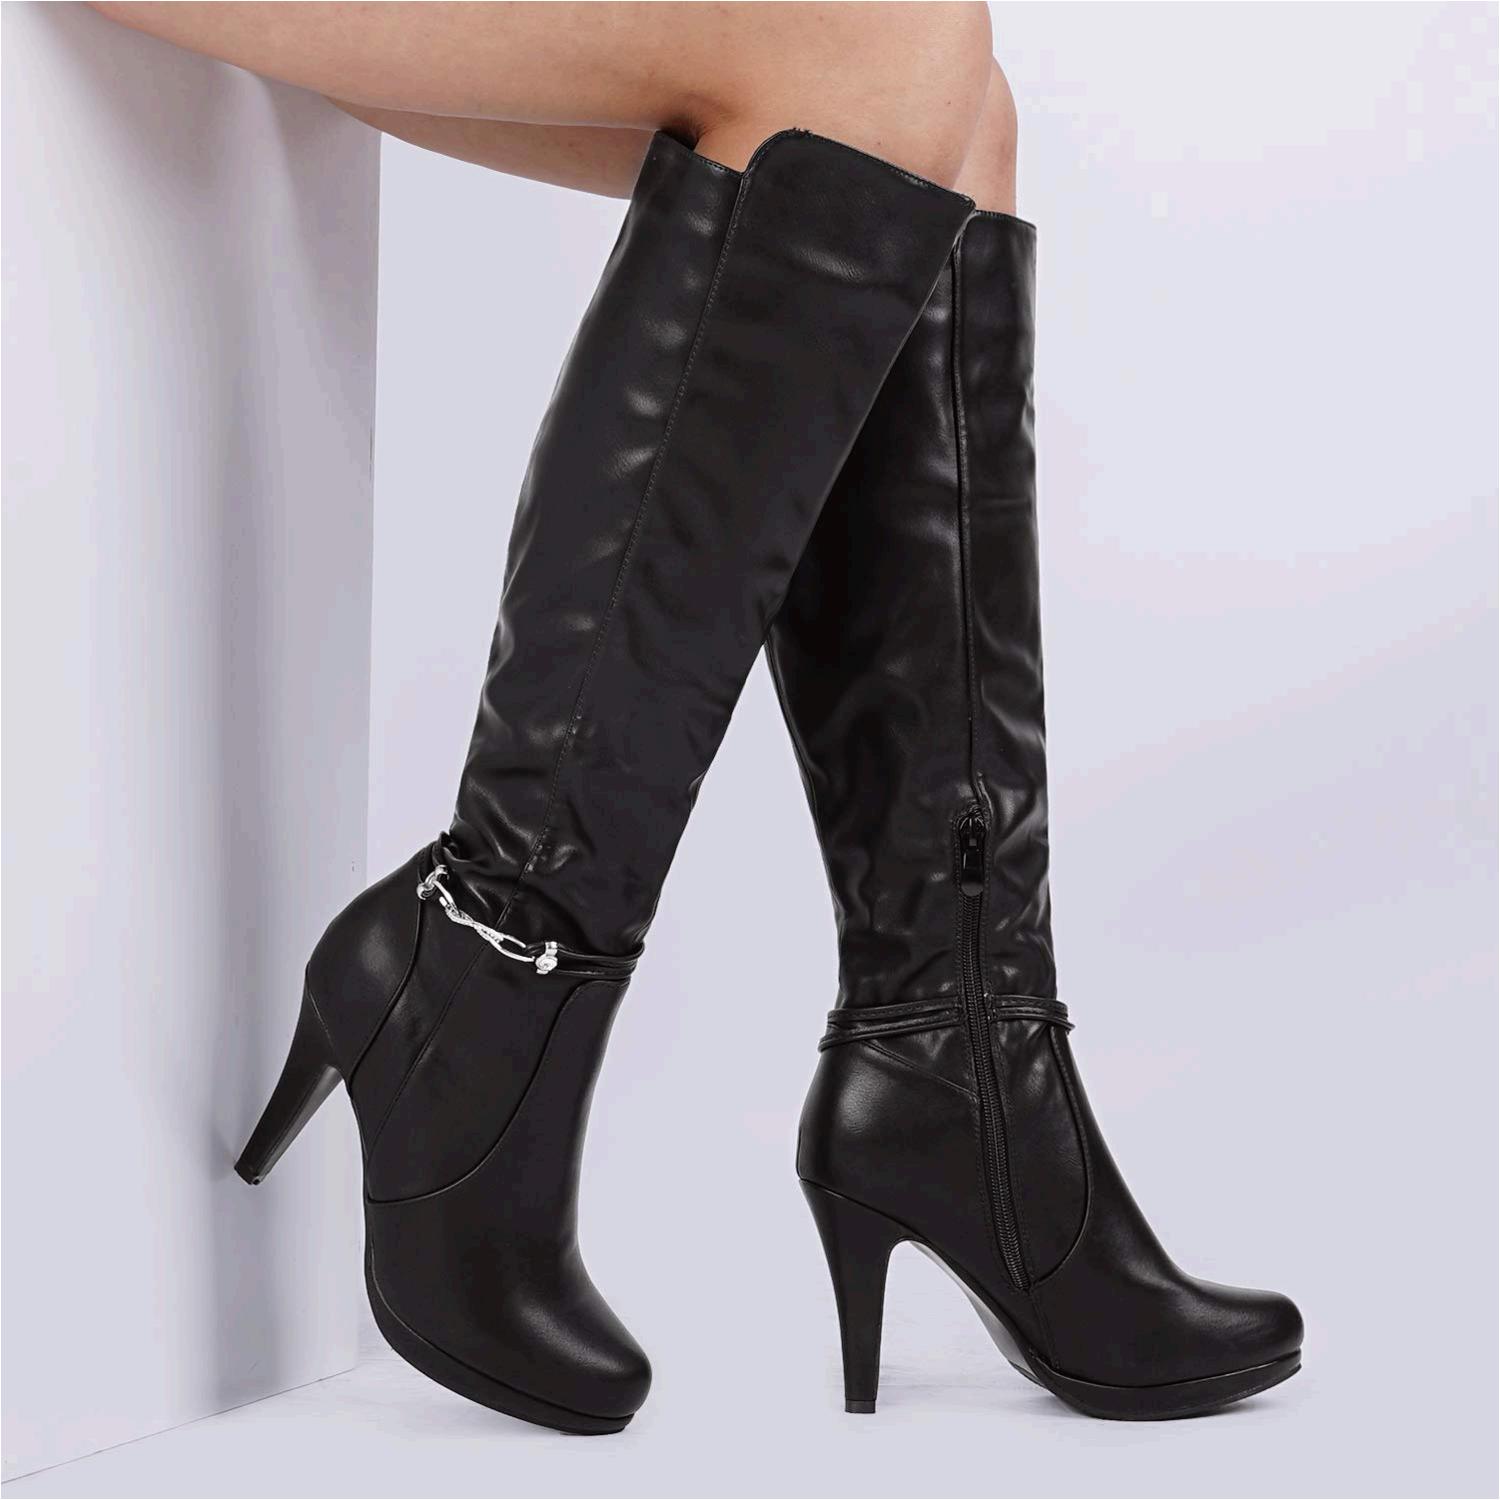 Dream Pairs Women S Knee High High Heel Boots Milann Black Pu Size 6 5 Uqgw 192623090411 Ebay